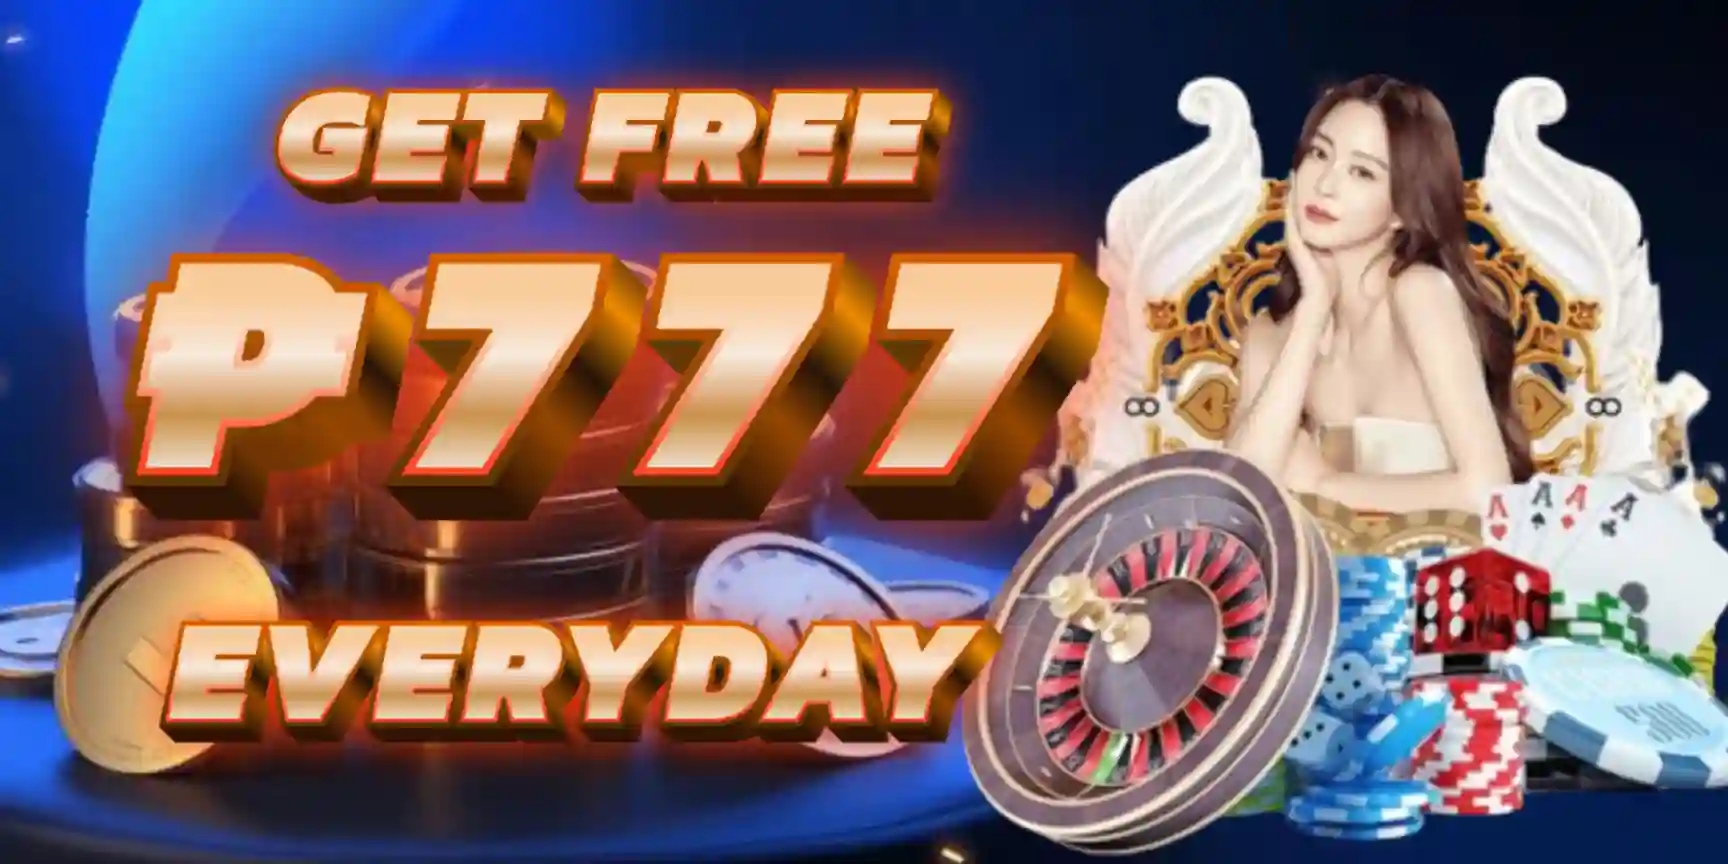 GET FREE 777 EVERYDAY BONUS